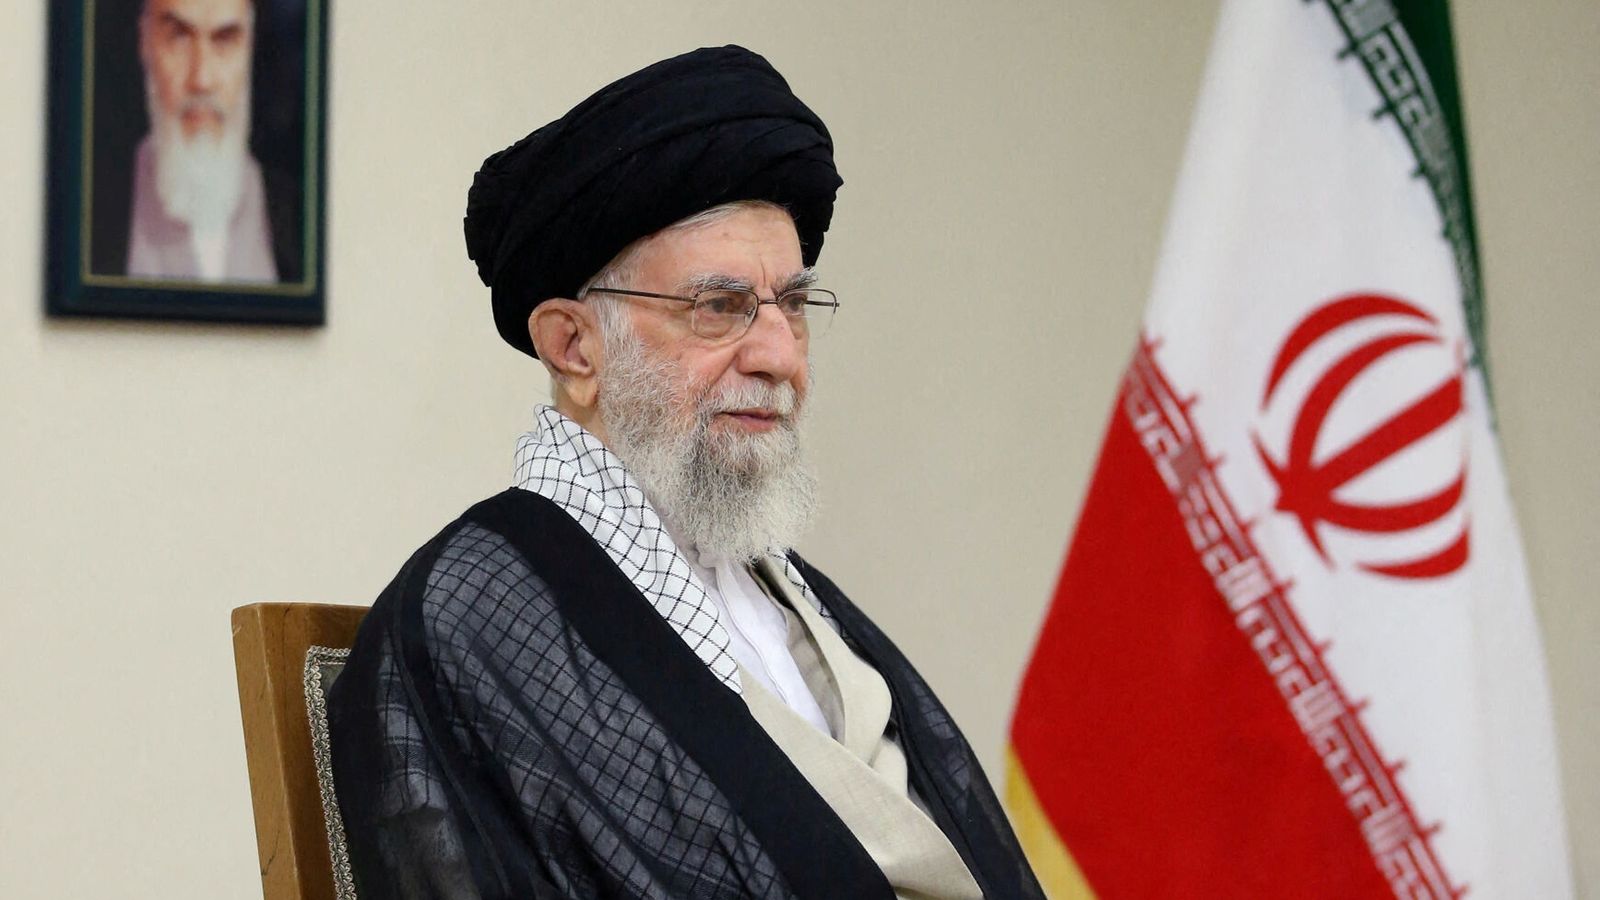 Iran's supreme leader says Mahsa Amini's death 'deeply broke my heart'